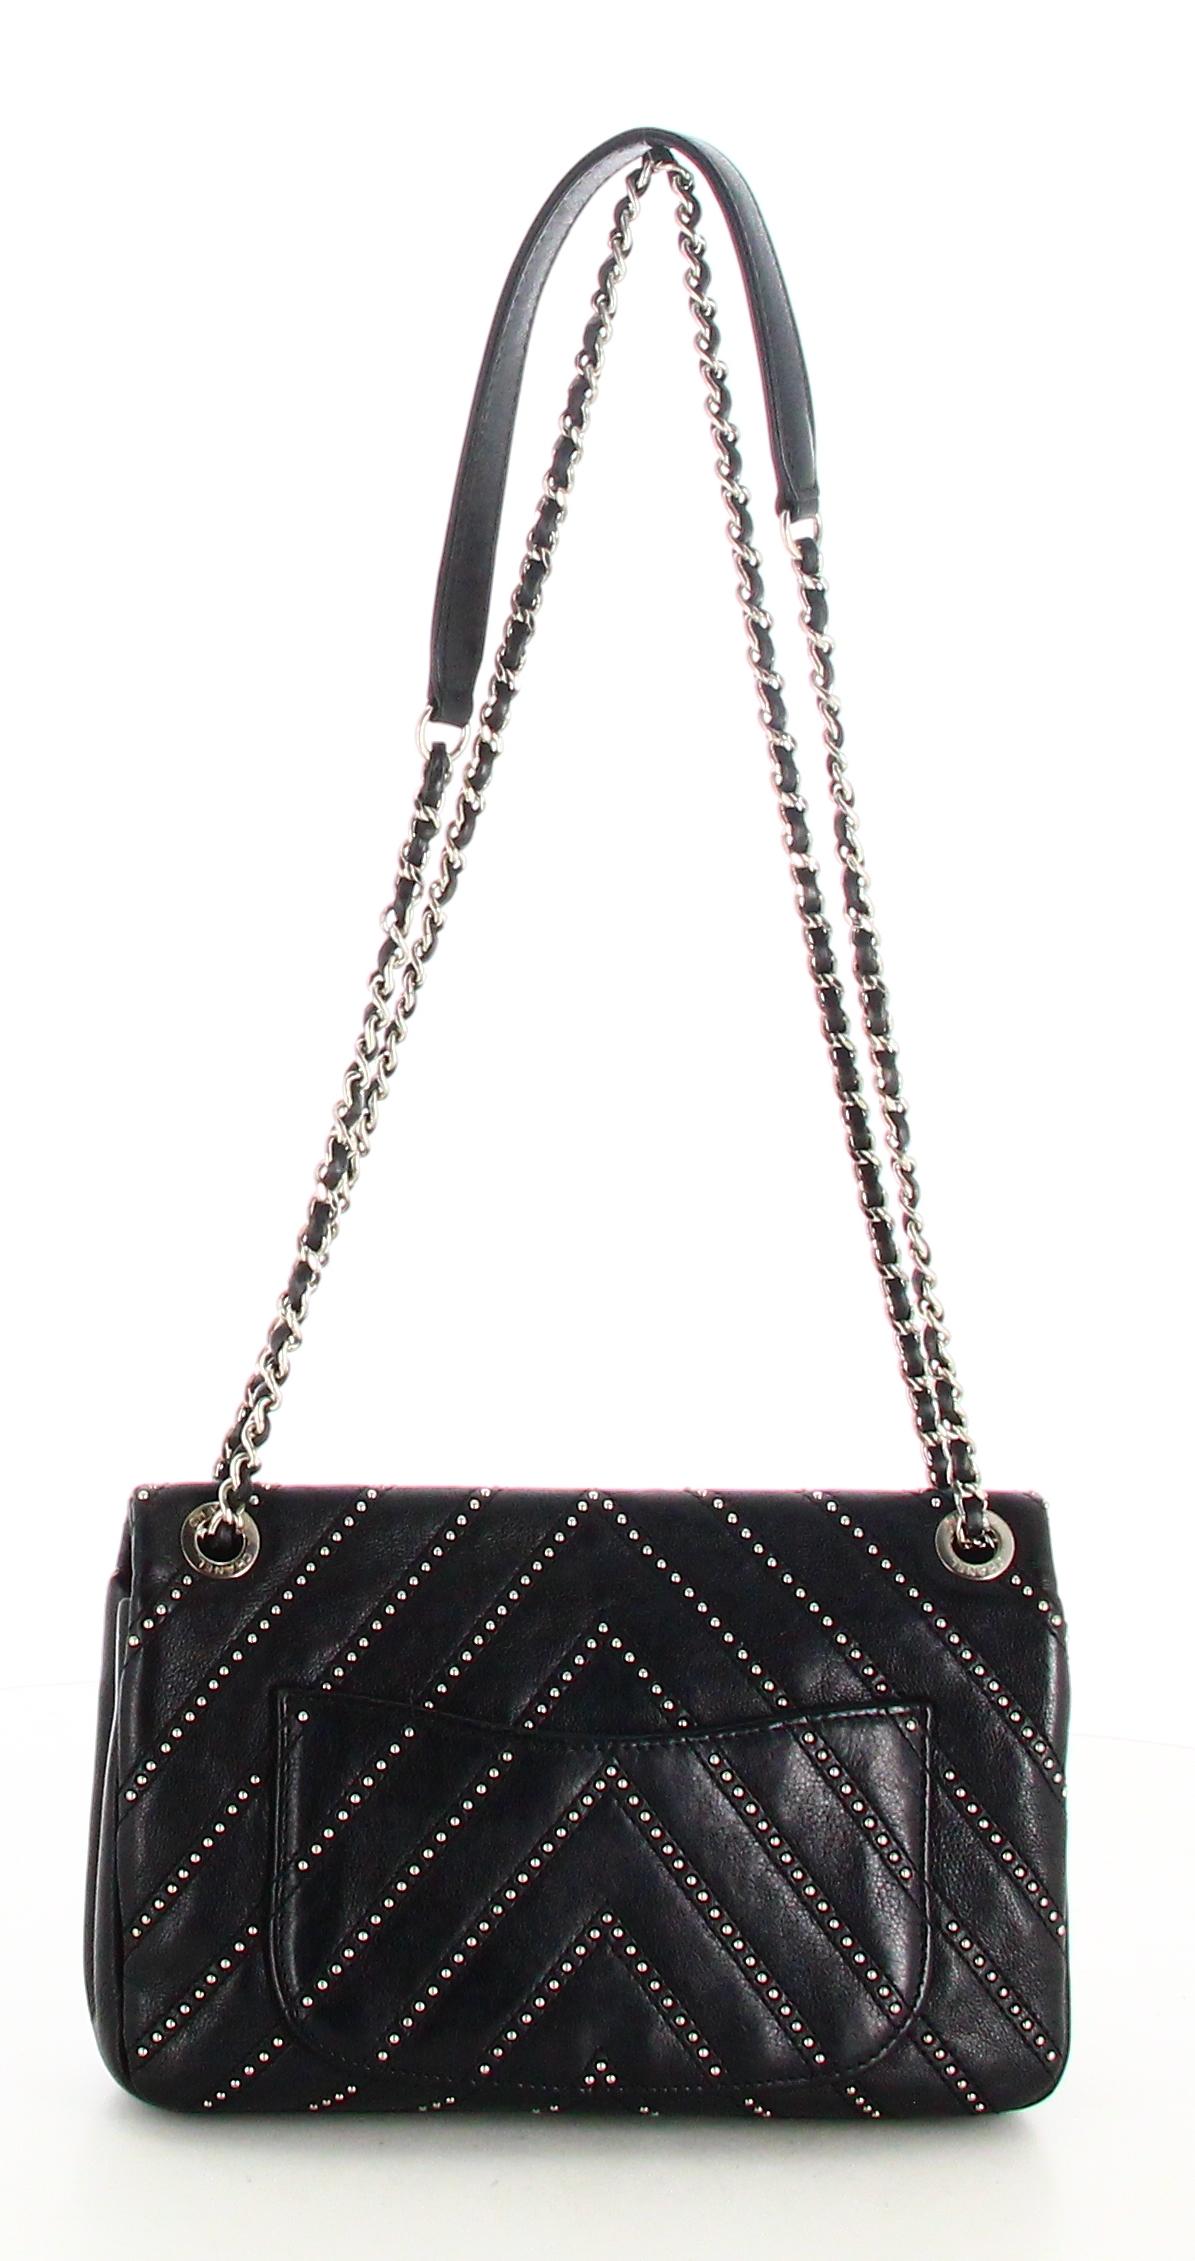 2017 Chanel Mini Handbag Chevron Stud Wars Flap Leather Black 1